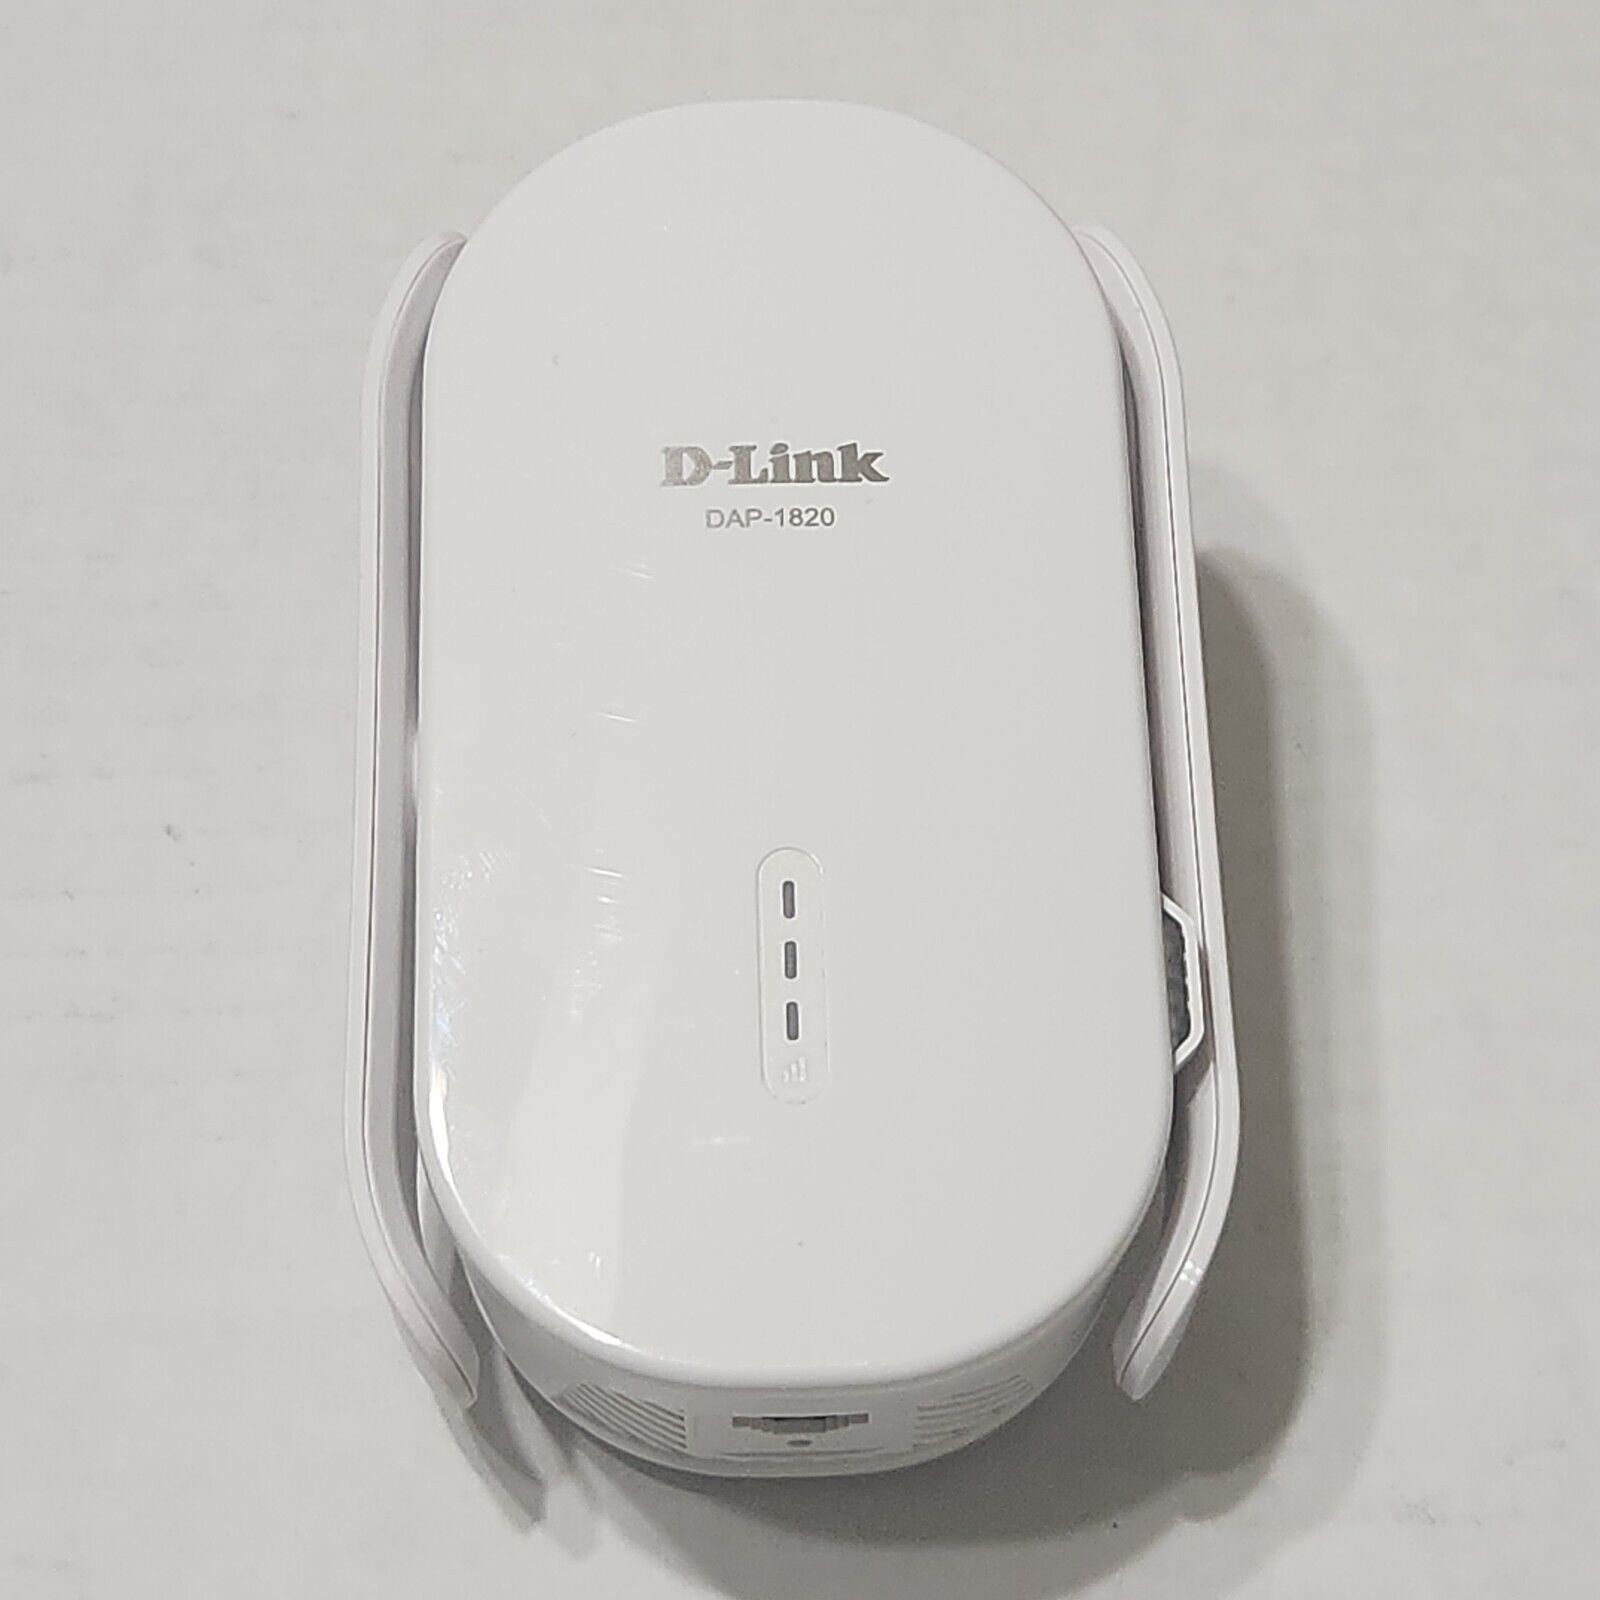 D-Link WiFi Range Extender Mesh Plug In Wall Signal Booster Dual Band DAP-1820